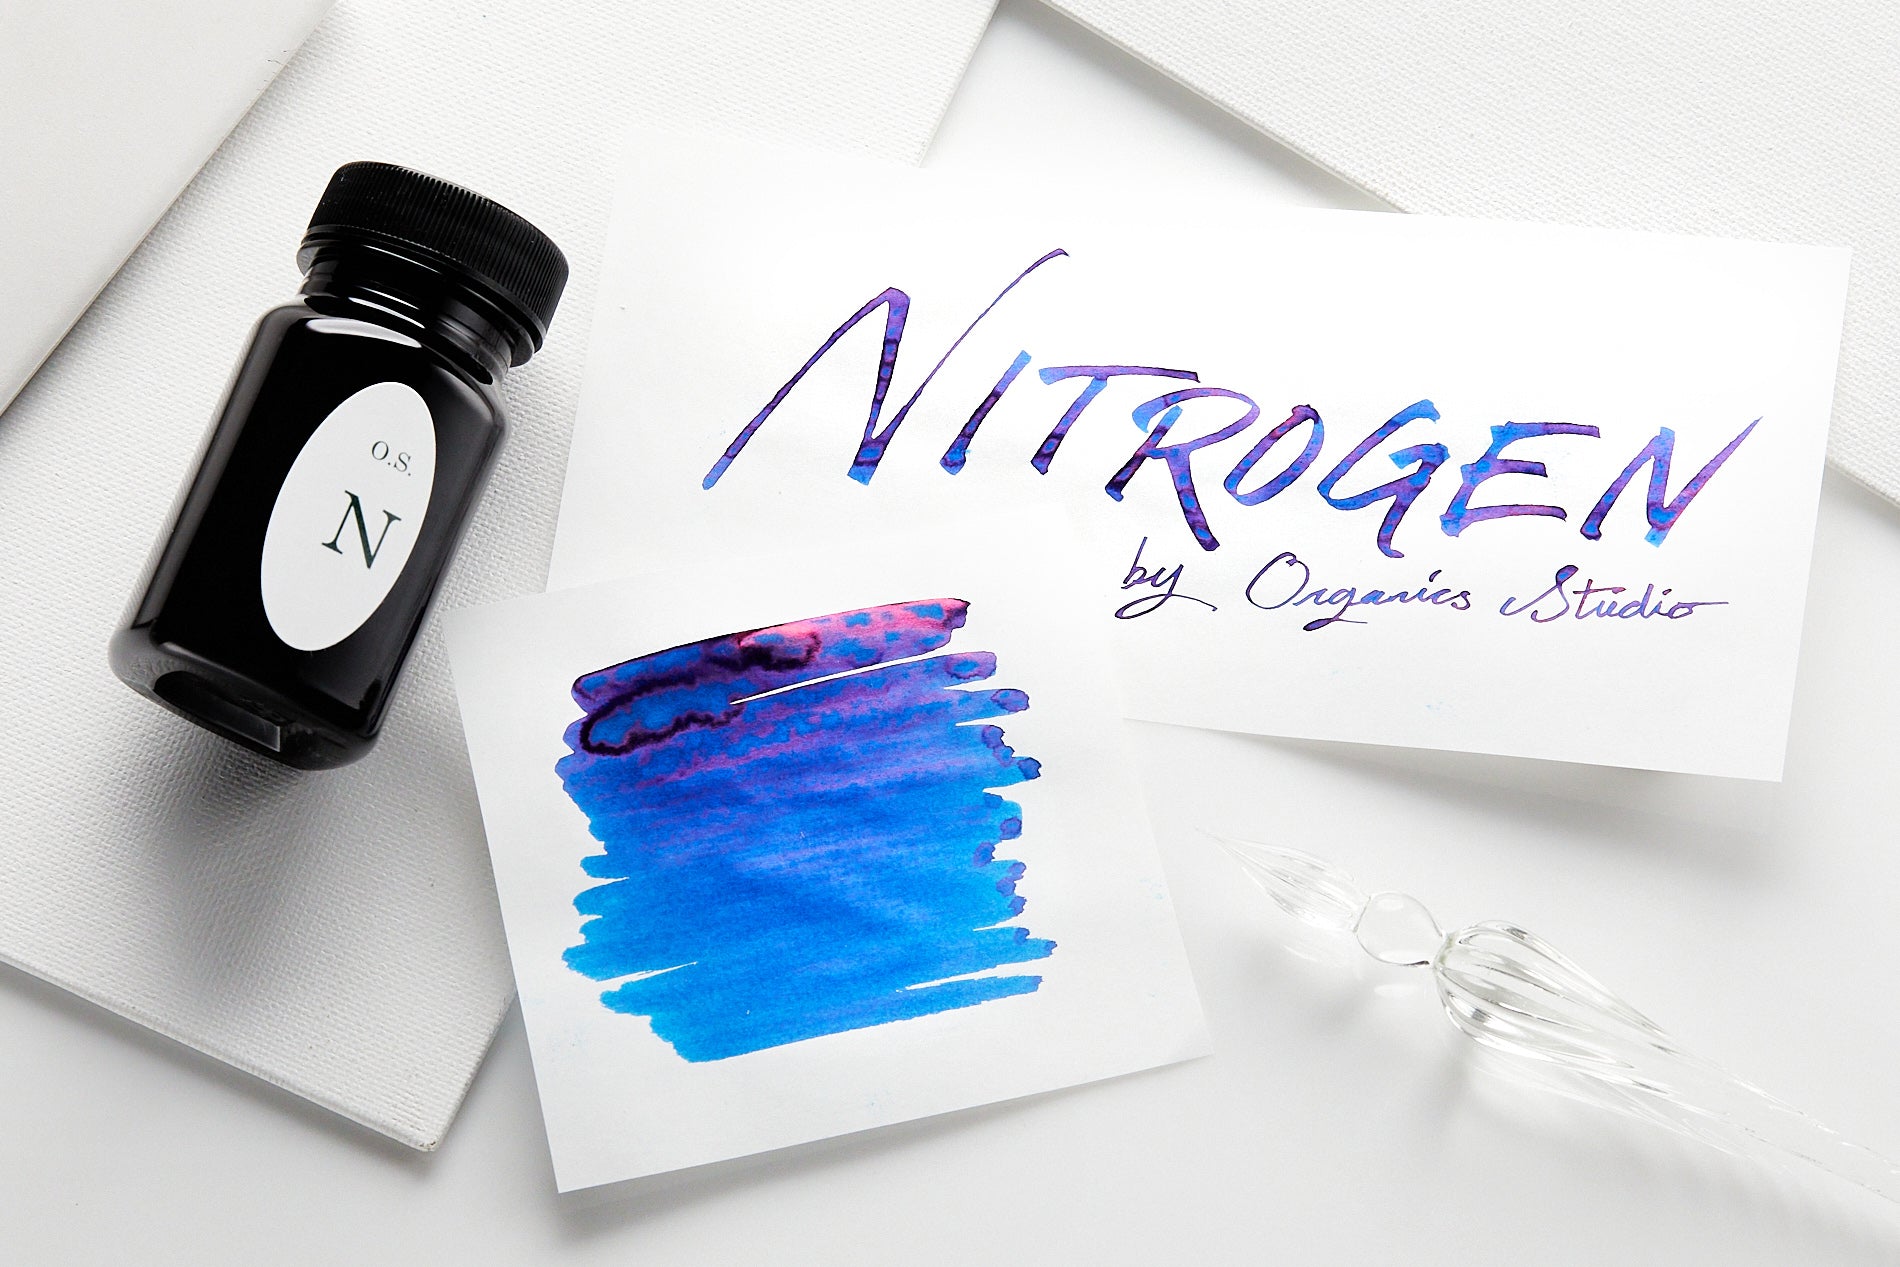 Organics Studi Nitrogen